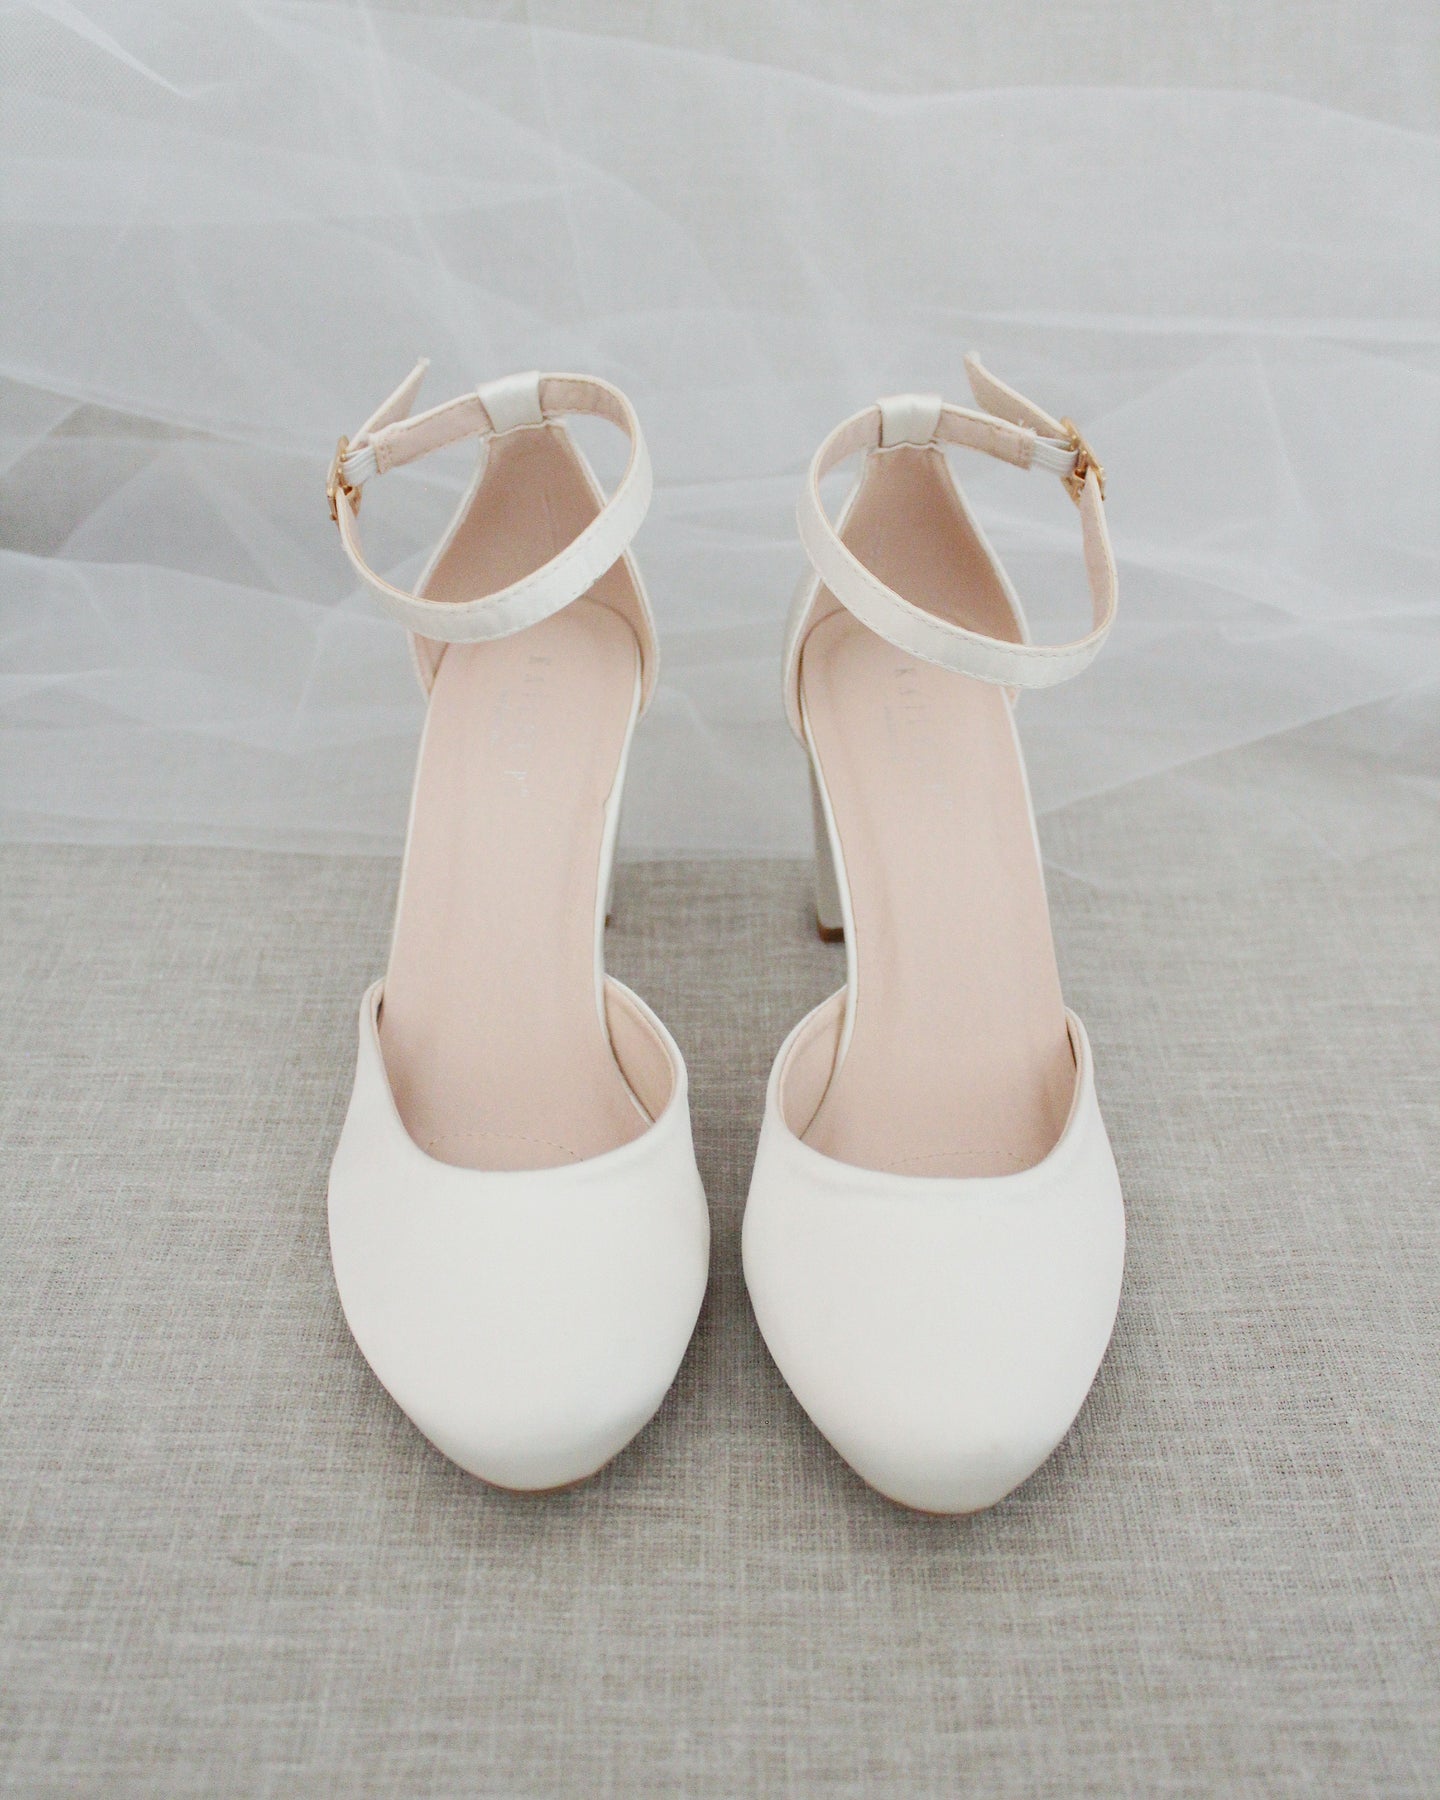 Cute White Sandals - Ankle-Strap Heels - High Heel Sandals - Lulus